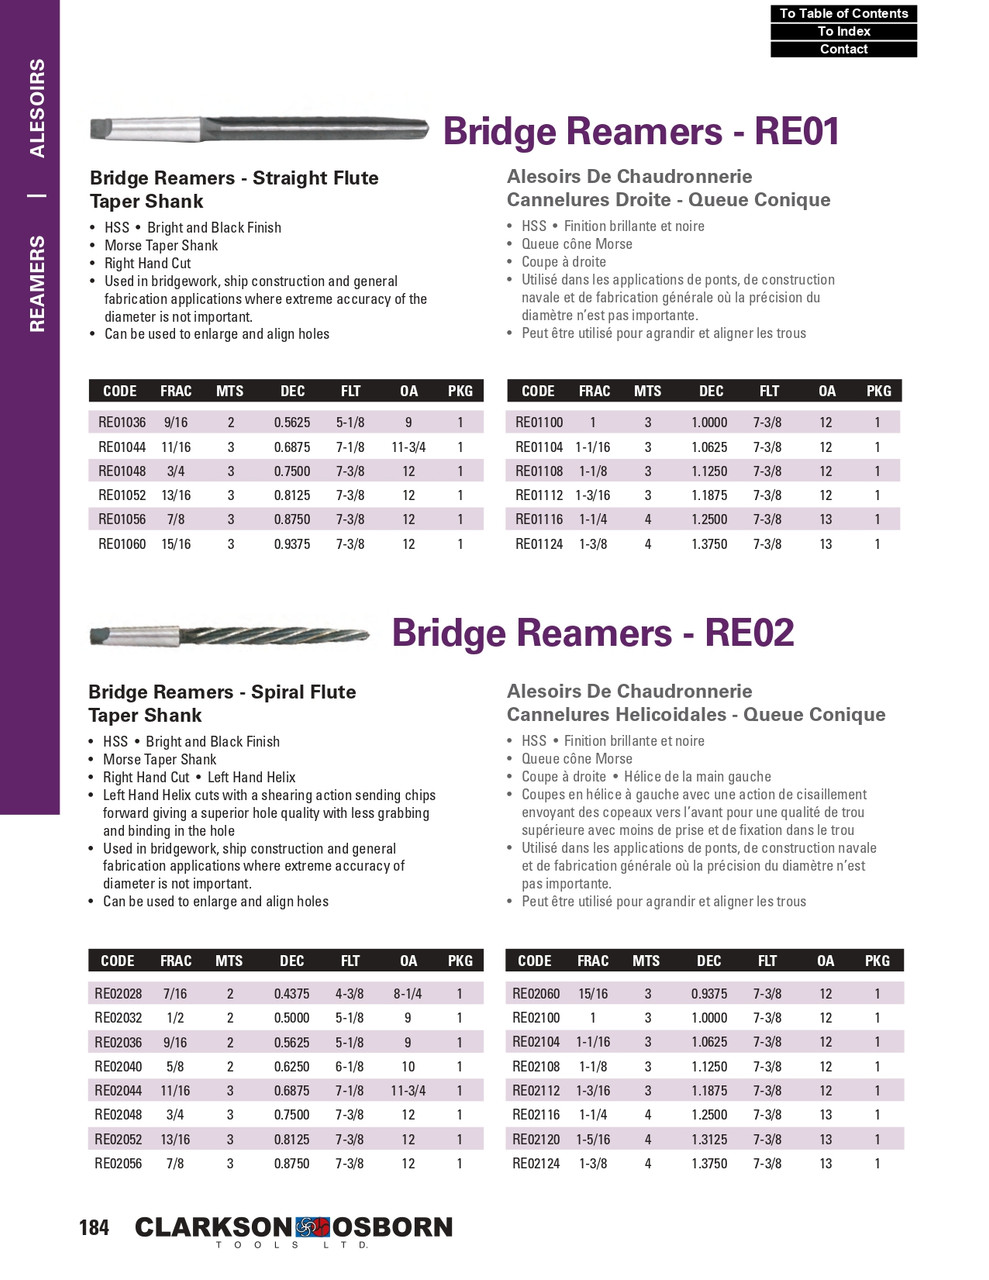 1-5/16" x #4 HSS Morse Taper Bridge Reamer   RE02120